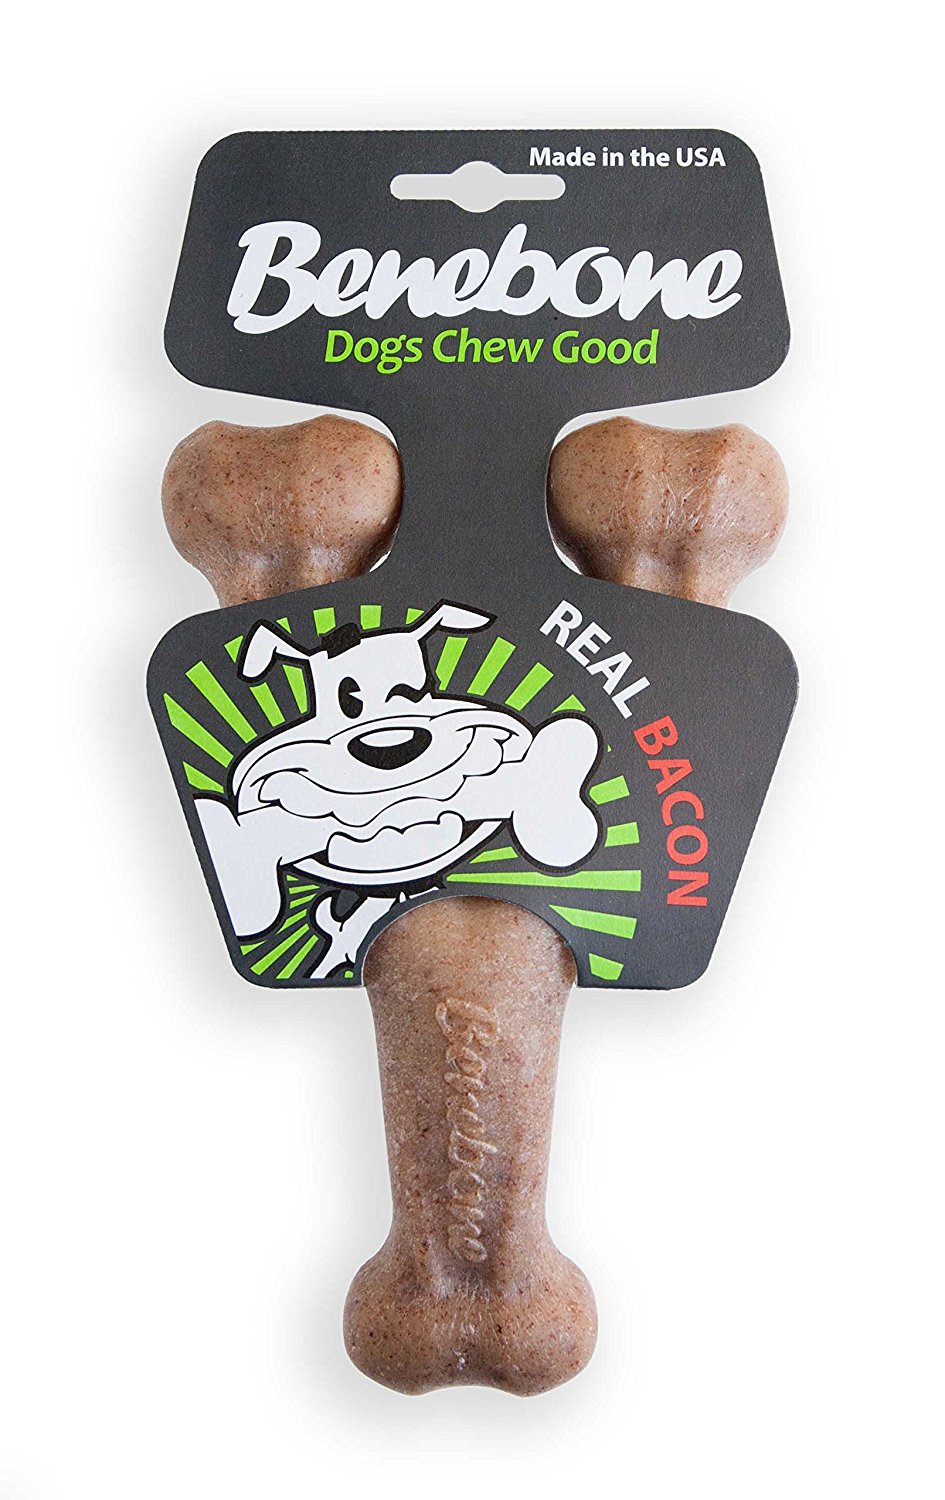 Flavored dog chew